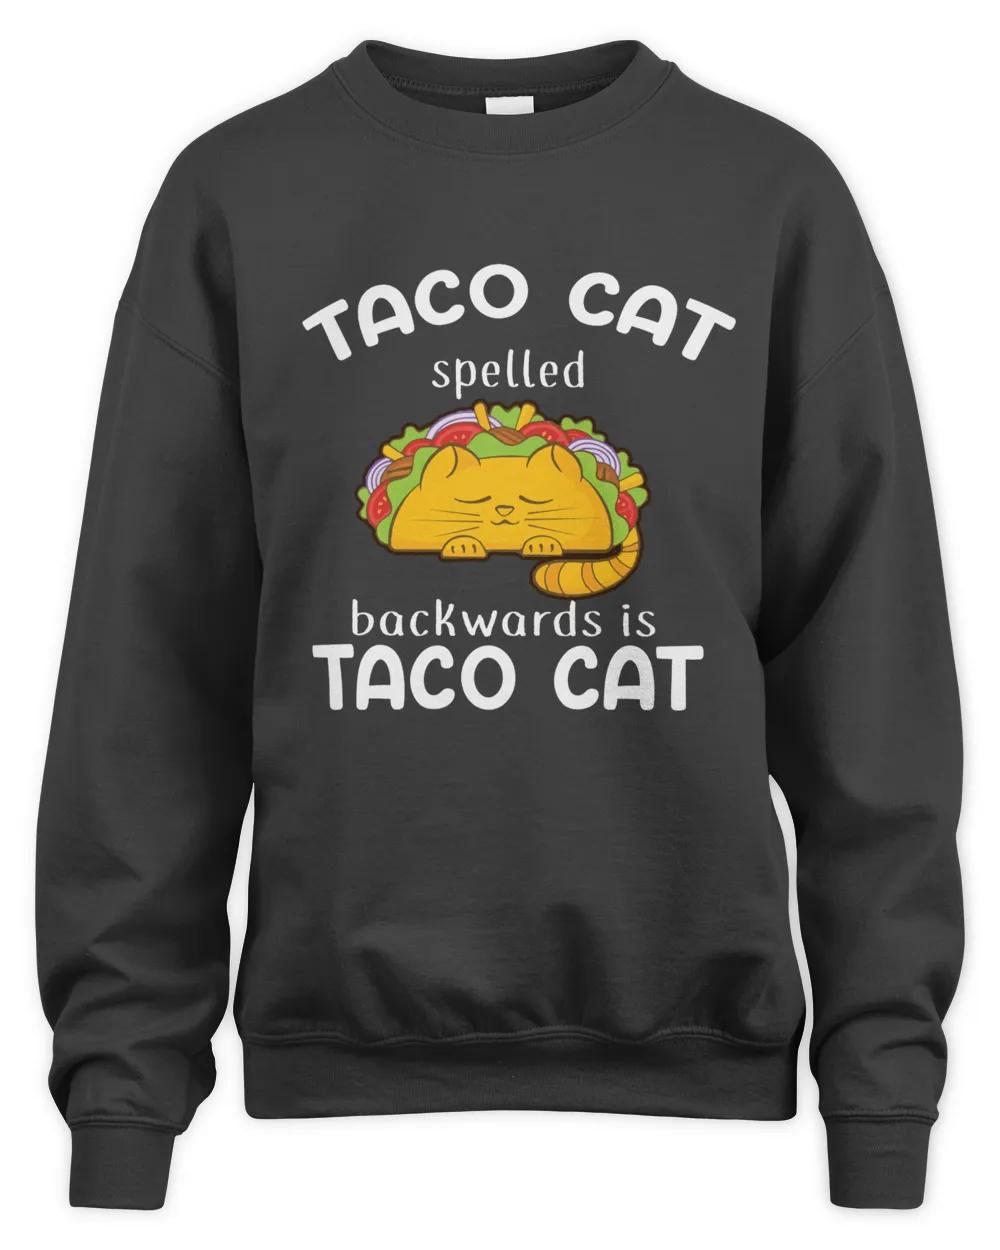 Best Taco Cat Spelled Backwards Is TacoCat Gift For Cinco De Mayo